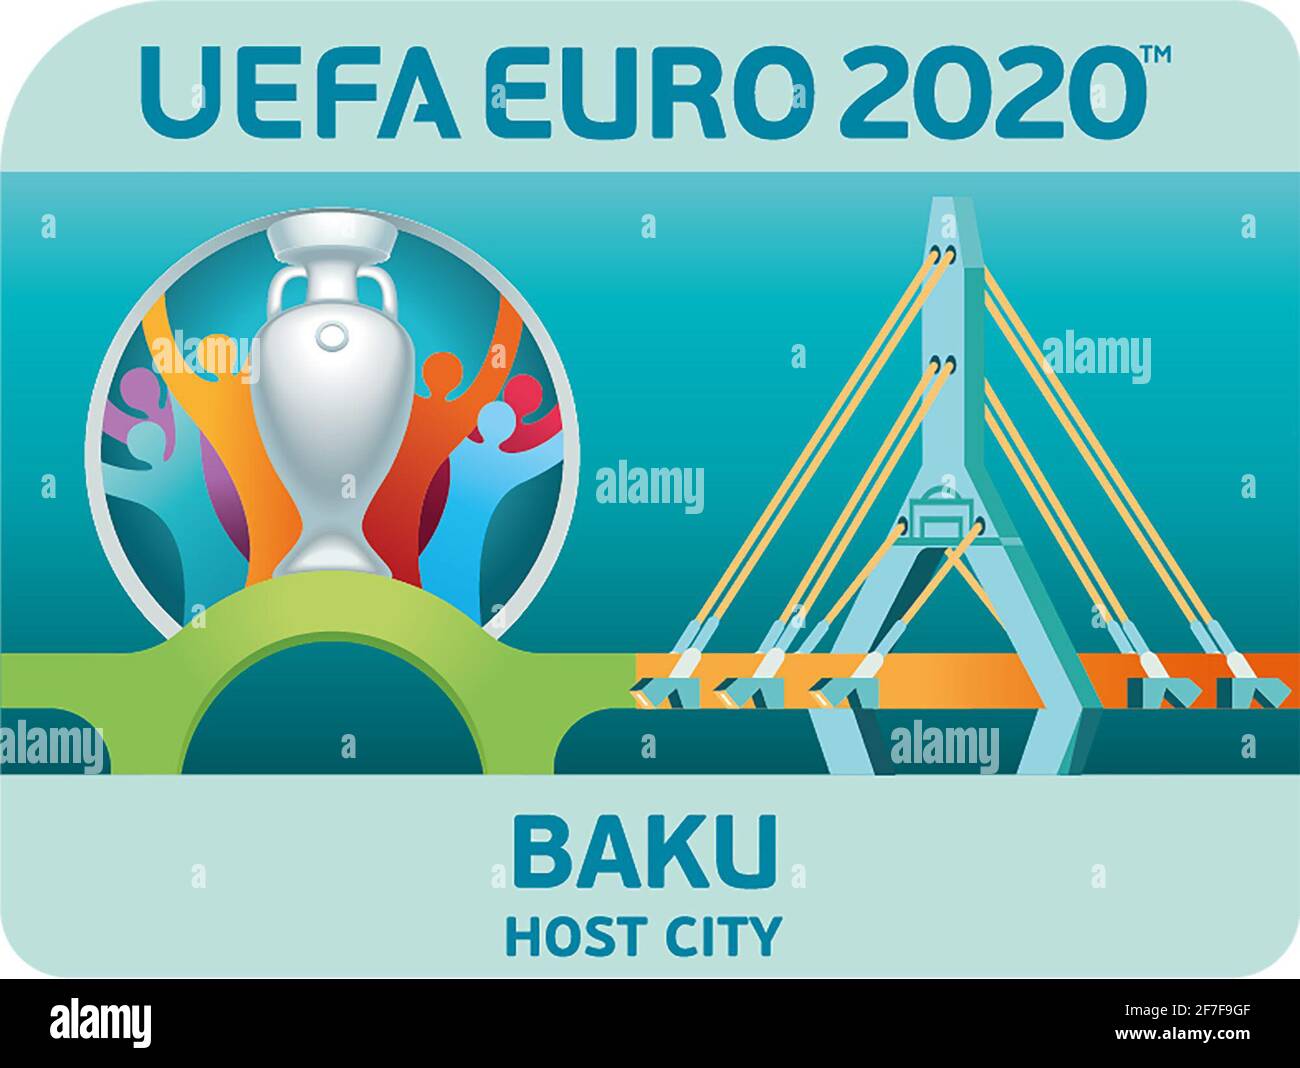 UEFA EURO 2020 Logo Host City Baku Stock Photo